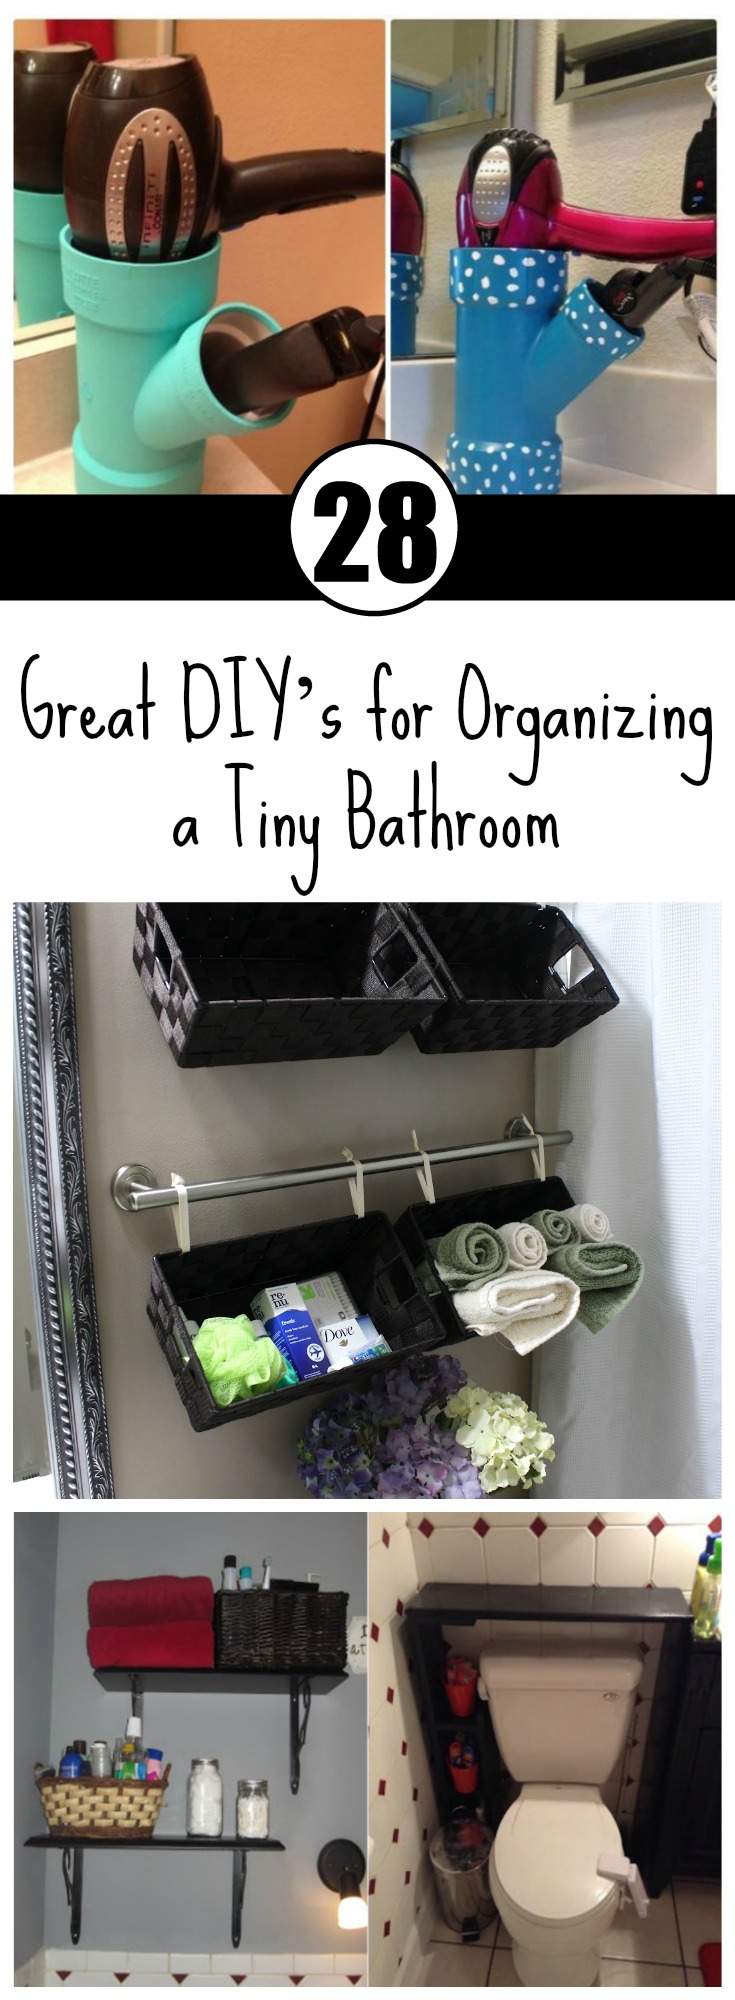 28 Great DIY's for Organizing a Tiny Bathroom